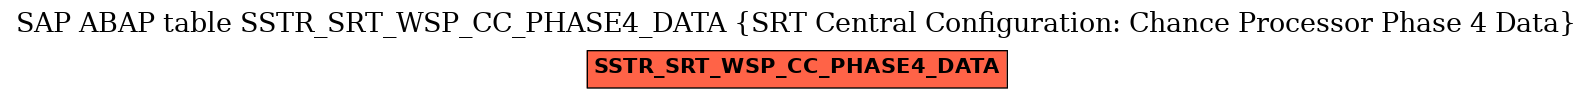 E-R Diagram for table SSTR_SRT_WSP_CC_PHASE4_DATA (SRT Central Configuration: Chance Processor Phase 4 Data)